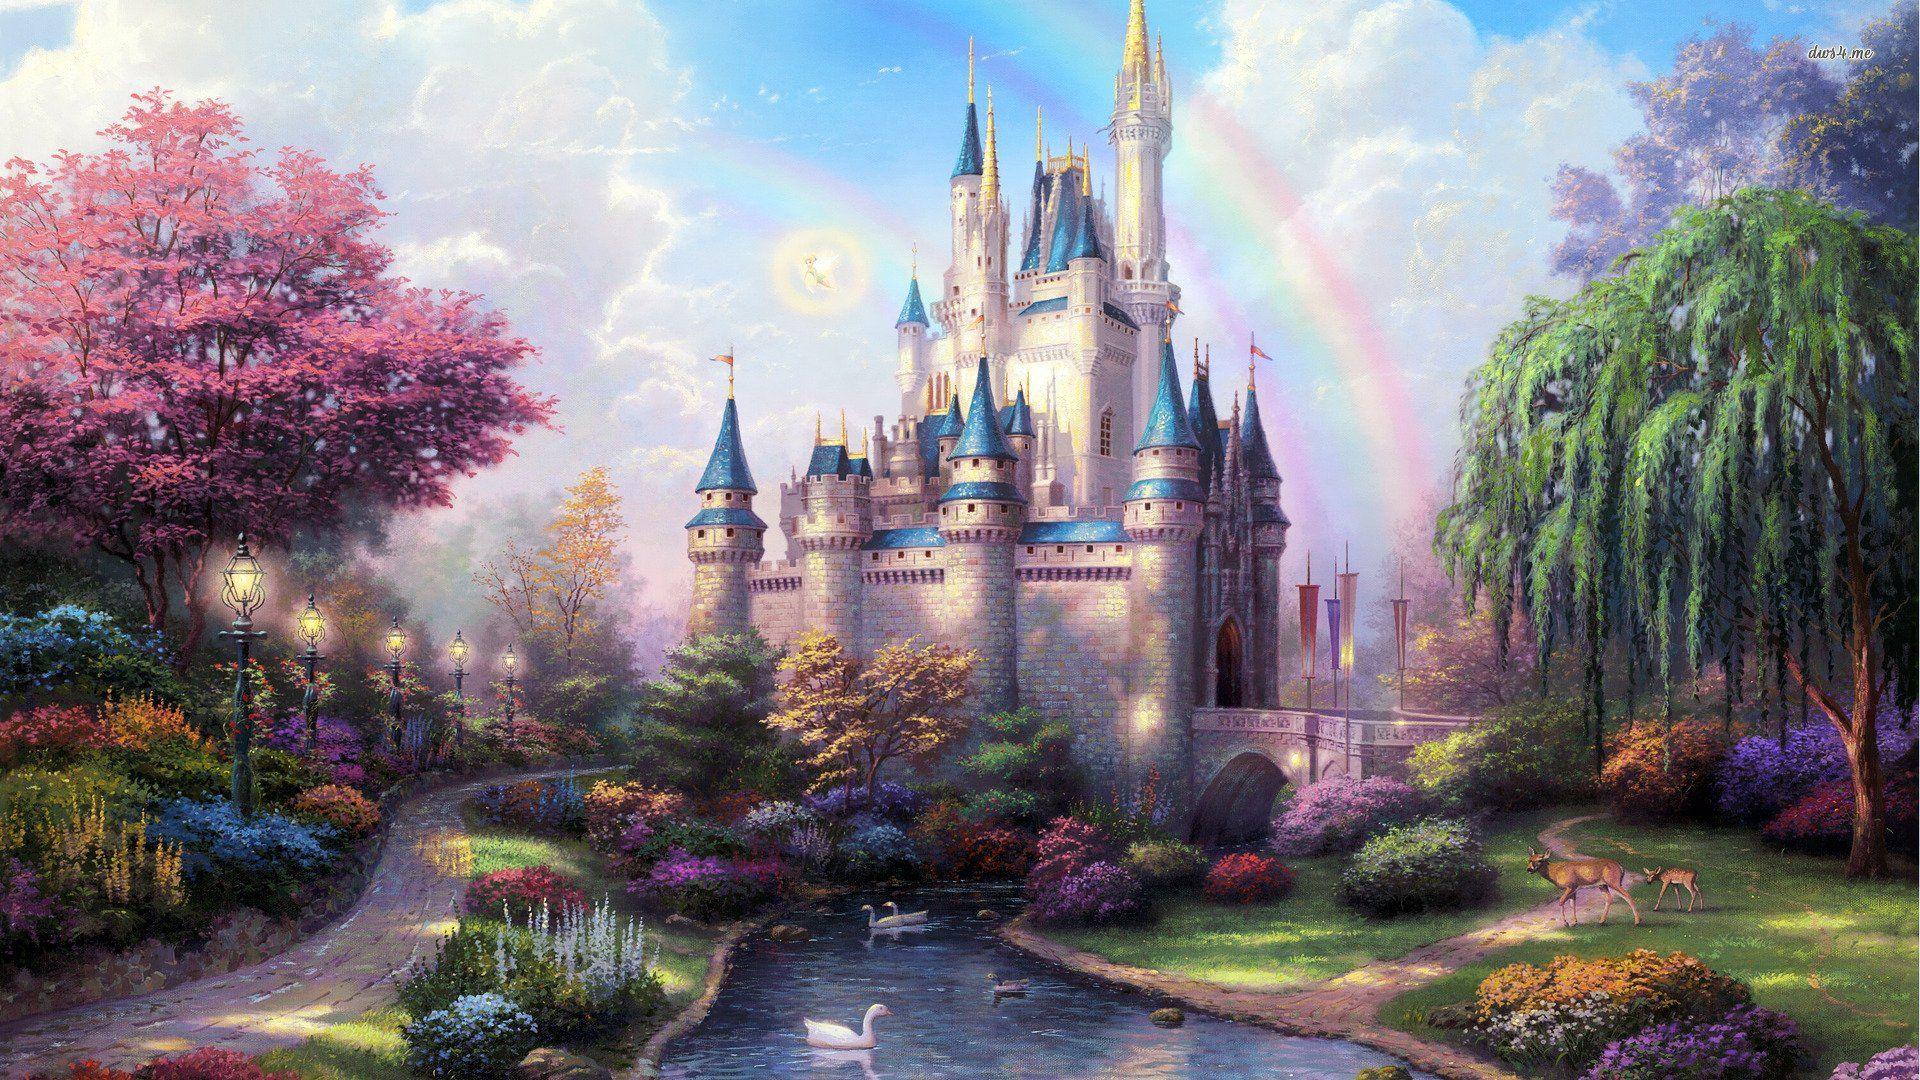 Fairyland Castle Wallpaper